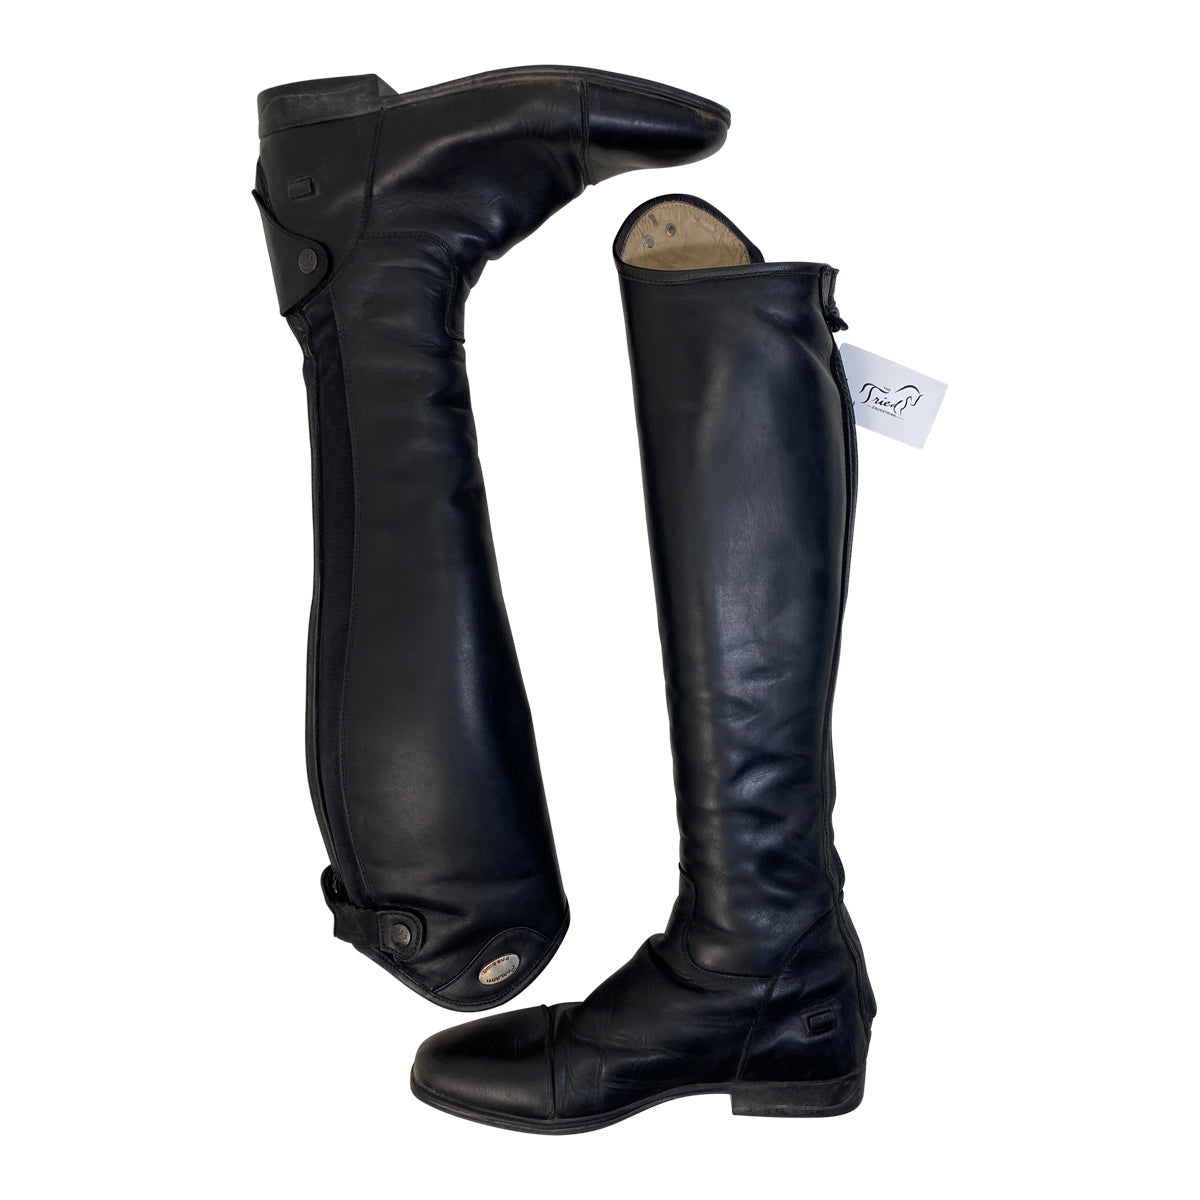 Parlanti Denver Classic Dress Boots in Black